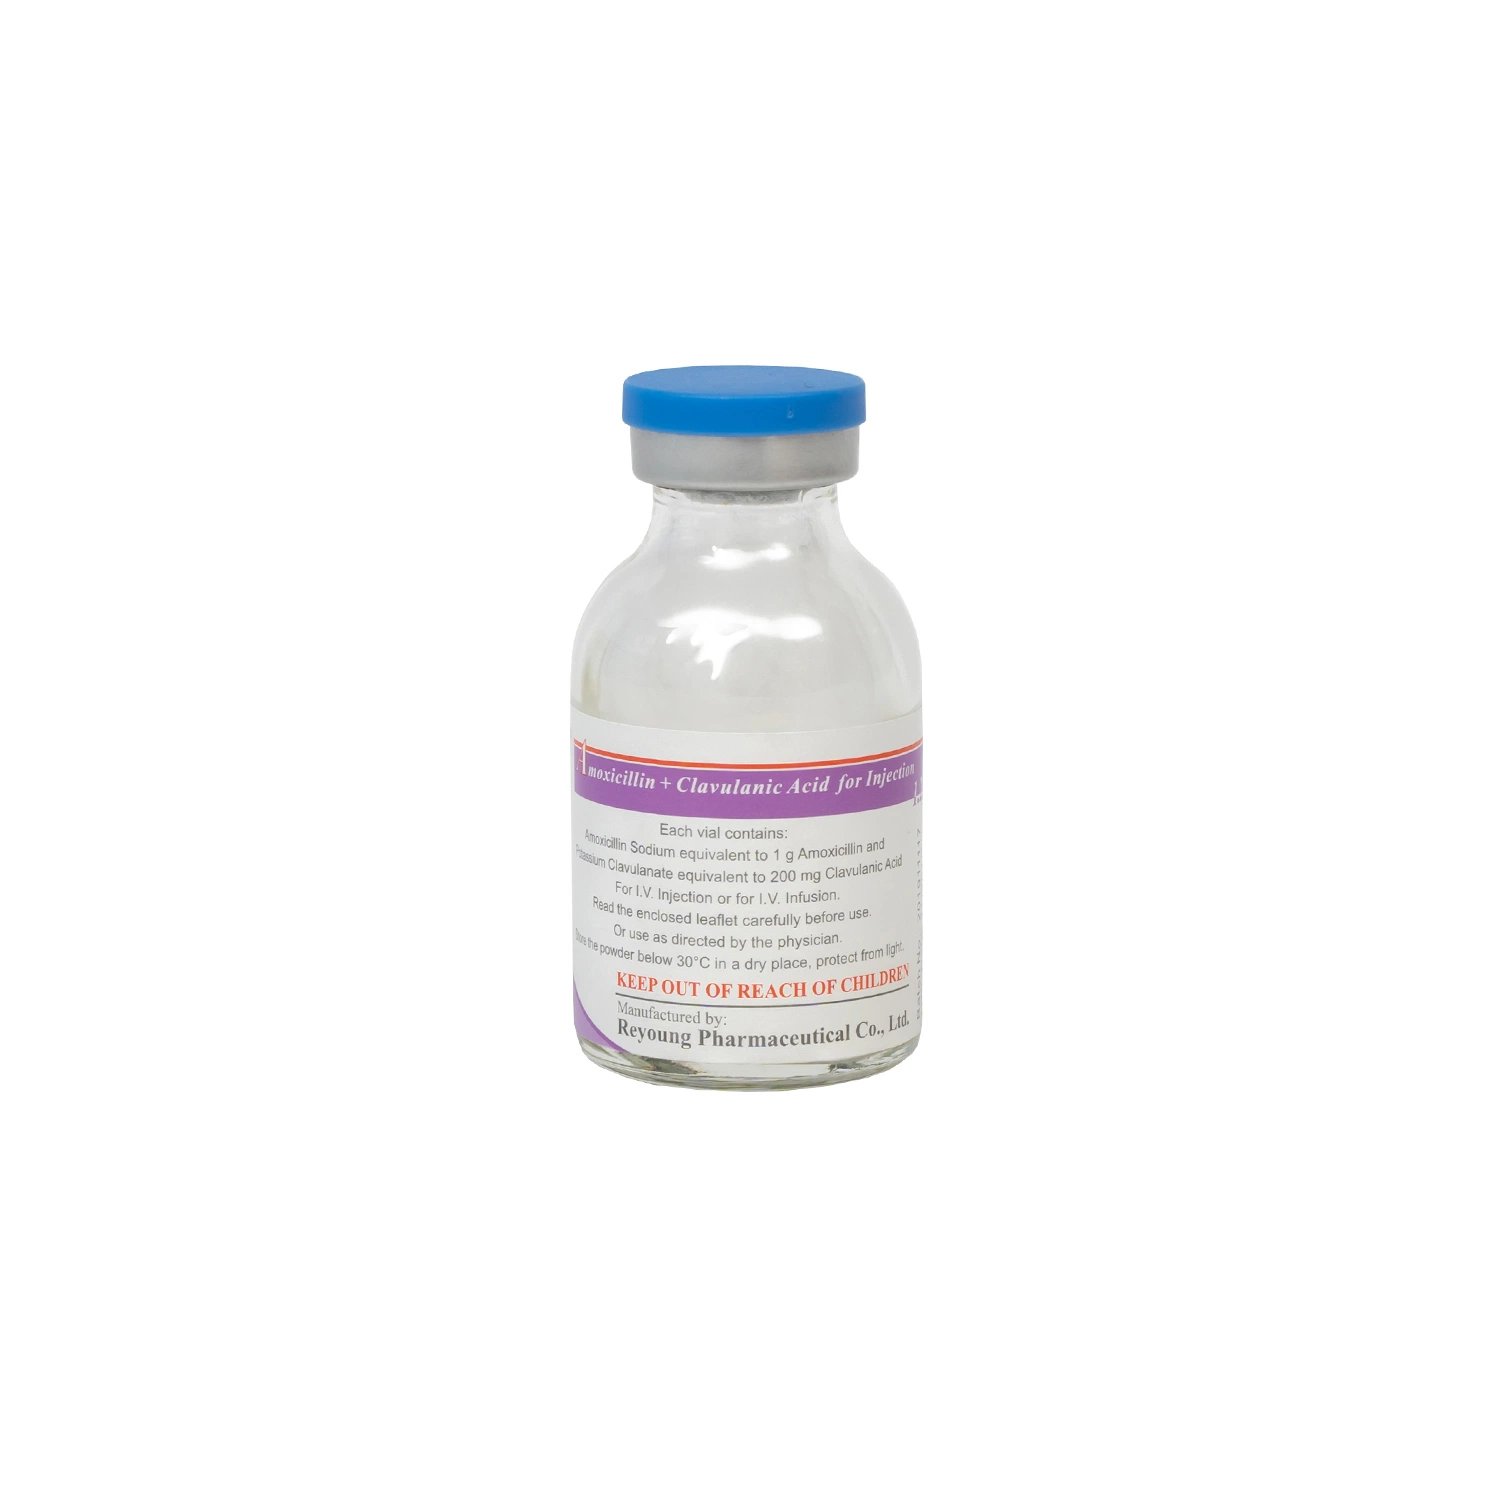 Sensitive Antibiotika Amoxicillin Natrium und Clavulanat Kalium für Injektion/Kapseln/Tablette/GMP-Zertifikat